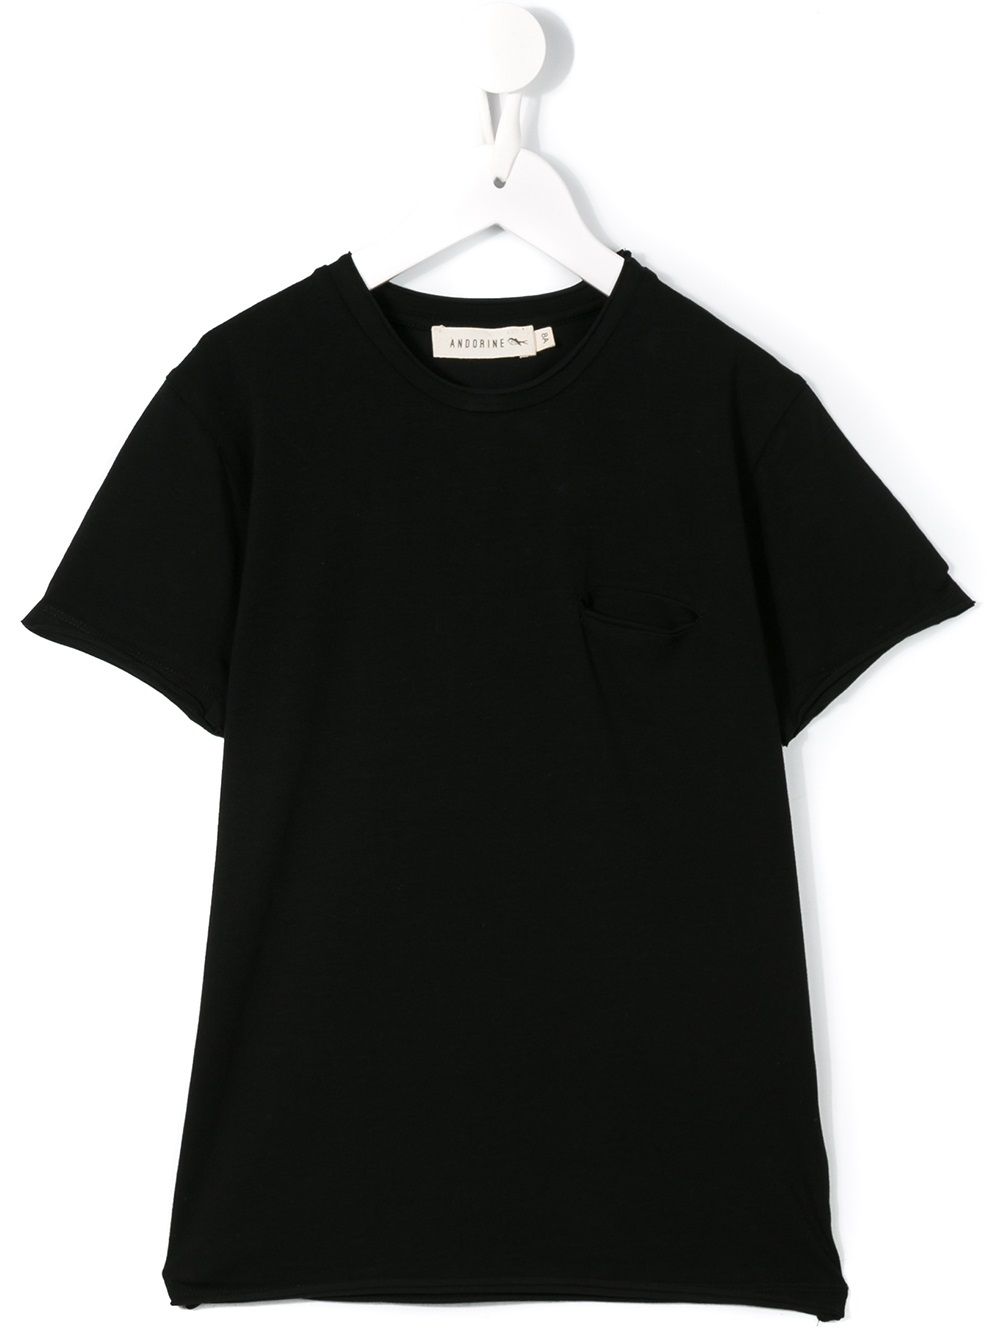 Image 1 of Andorine Reaxion T-shirt